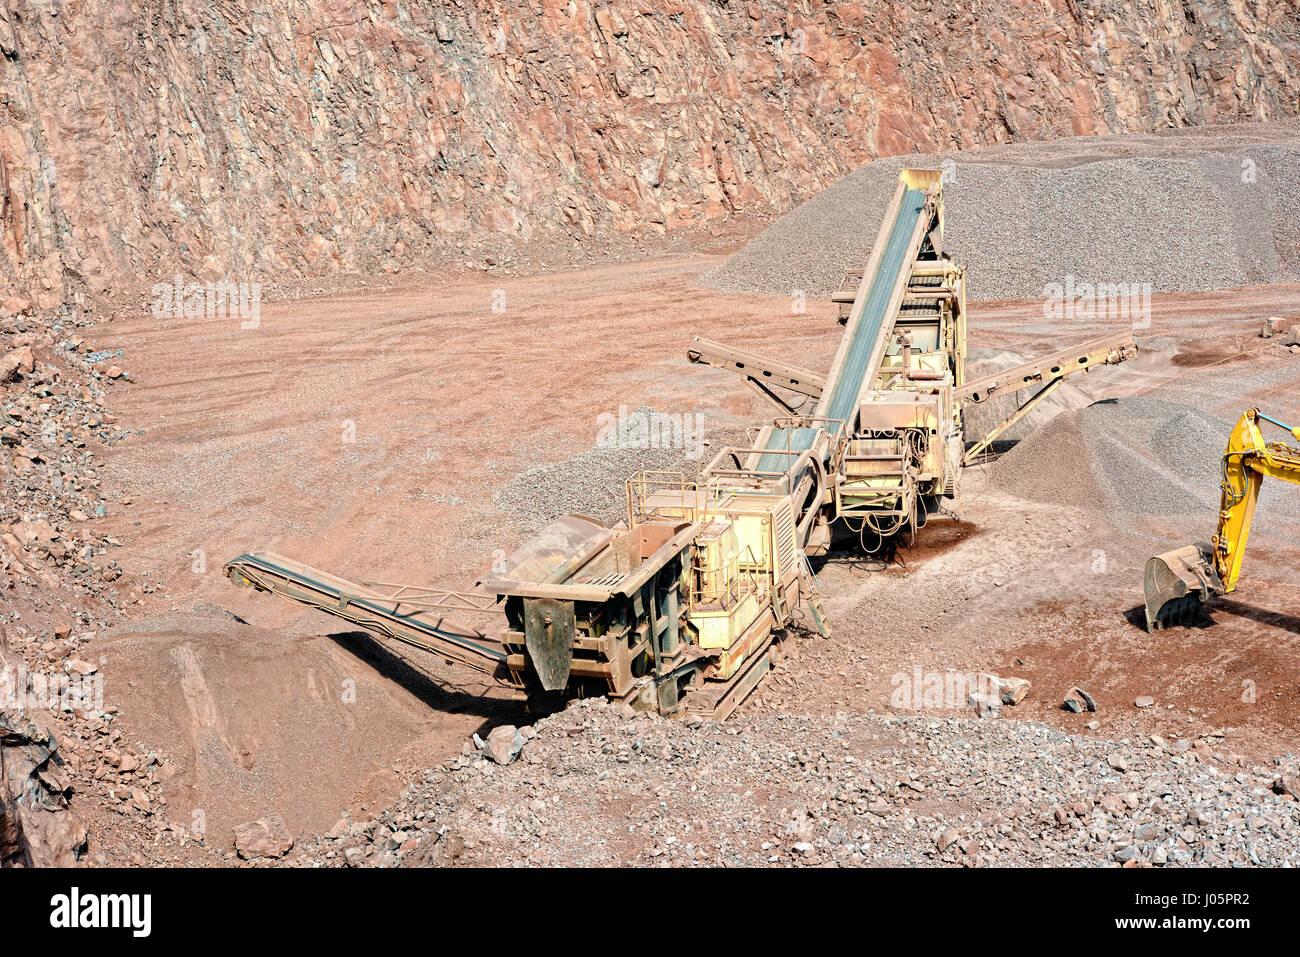 https://c8.alamy.com/comp/J05PR2/stone-crusher-in-a-quarry-mining-industry-J05PR2.jpg